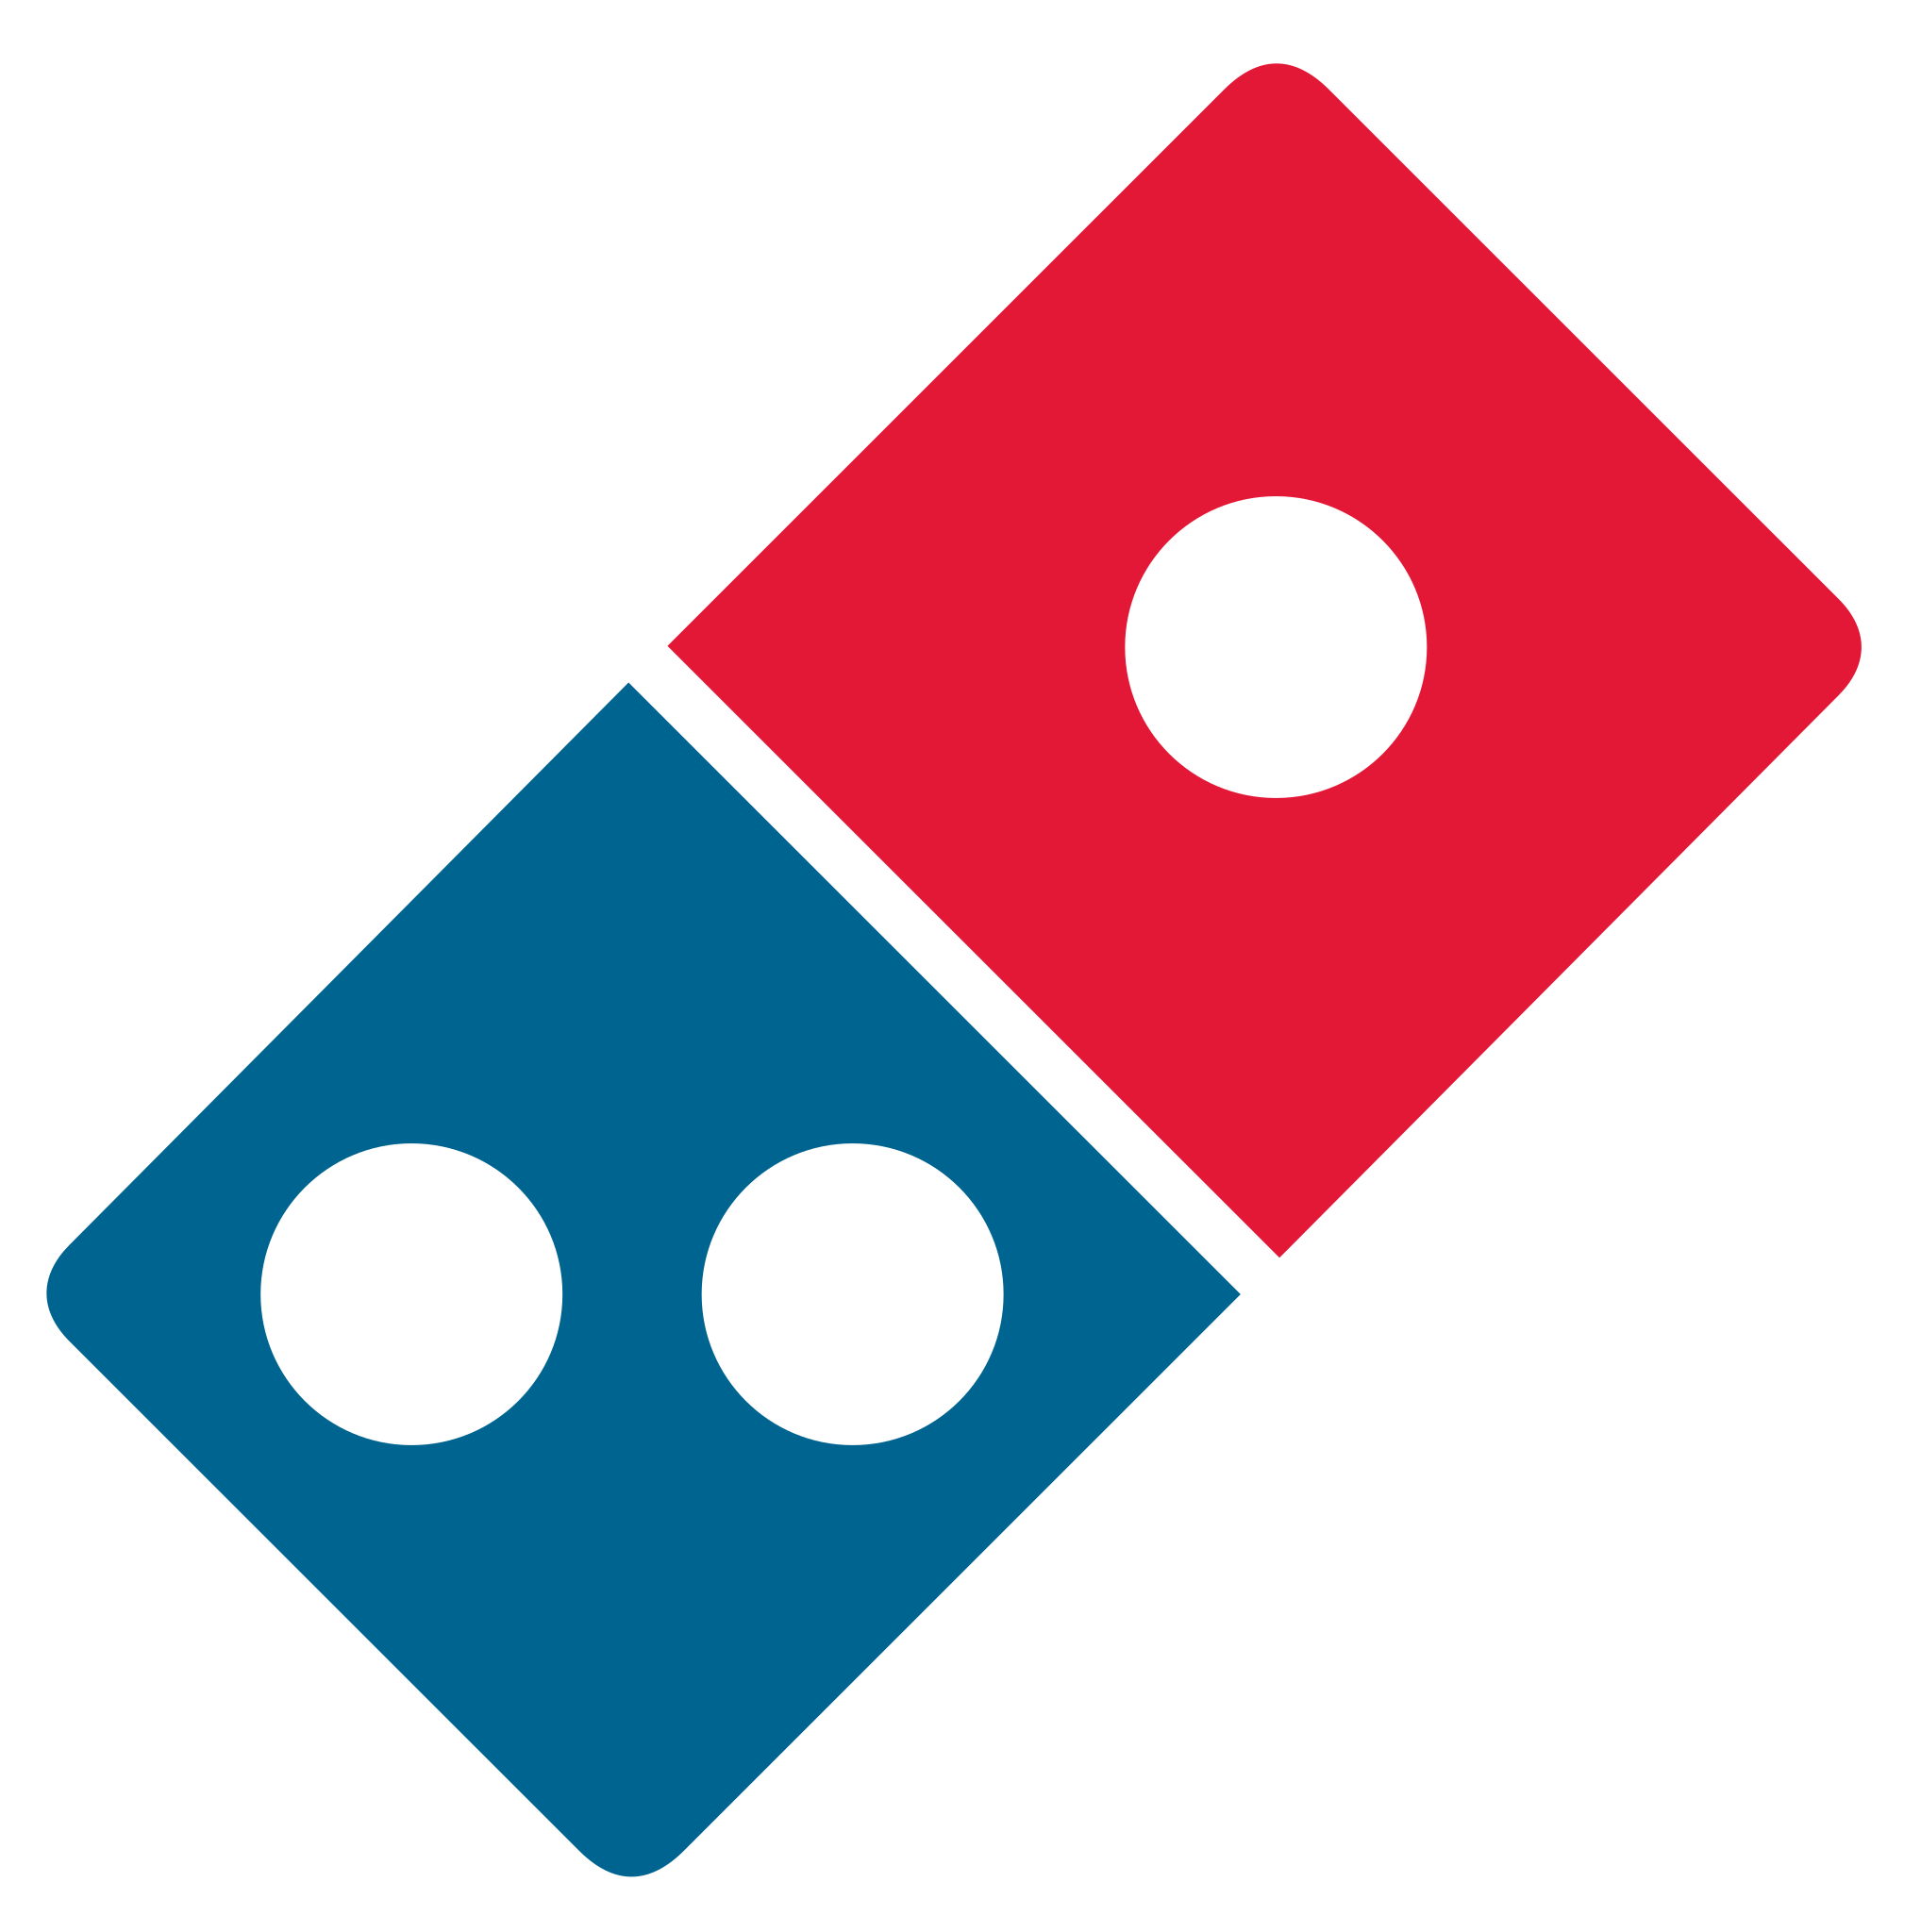 dominos square logo